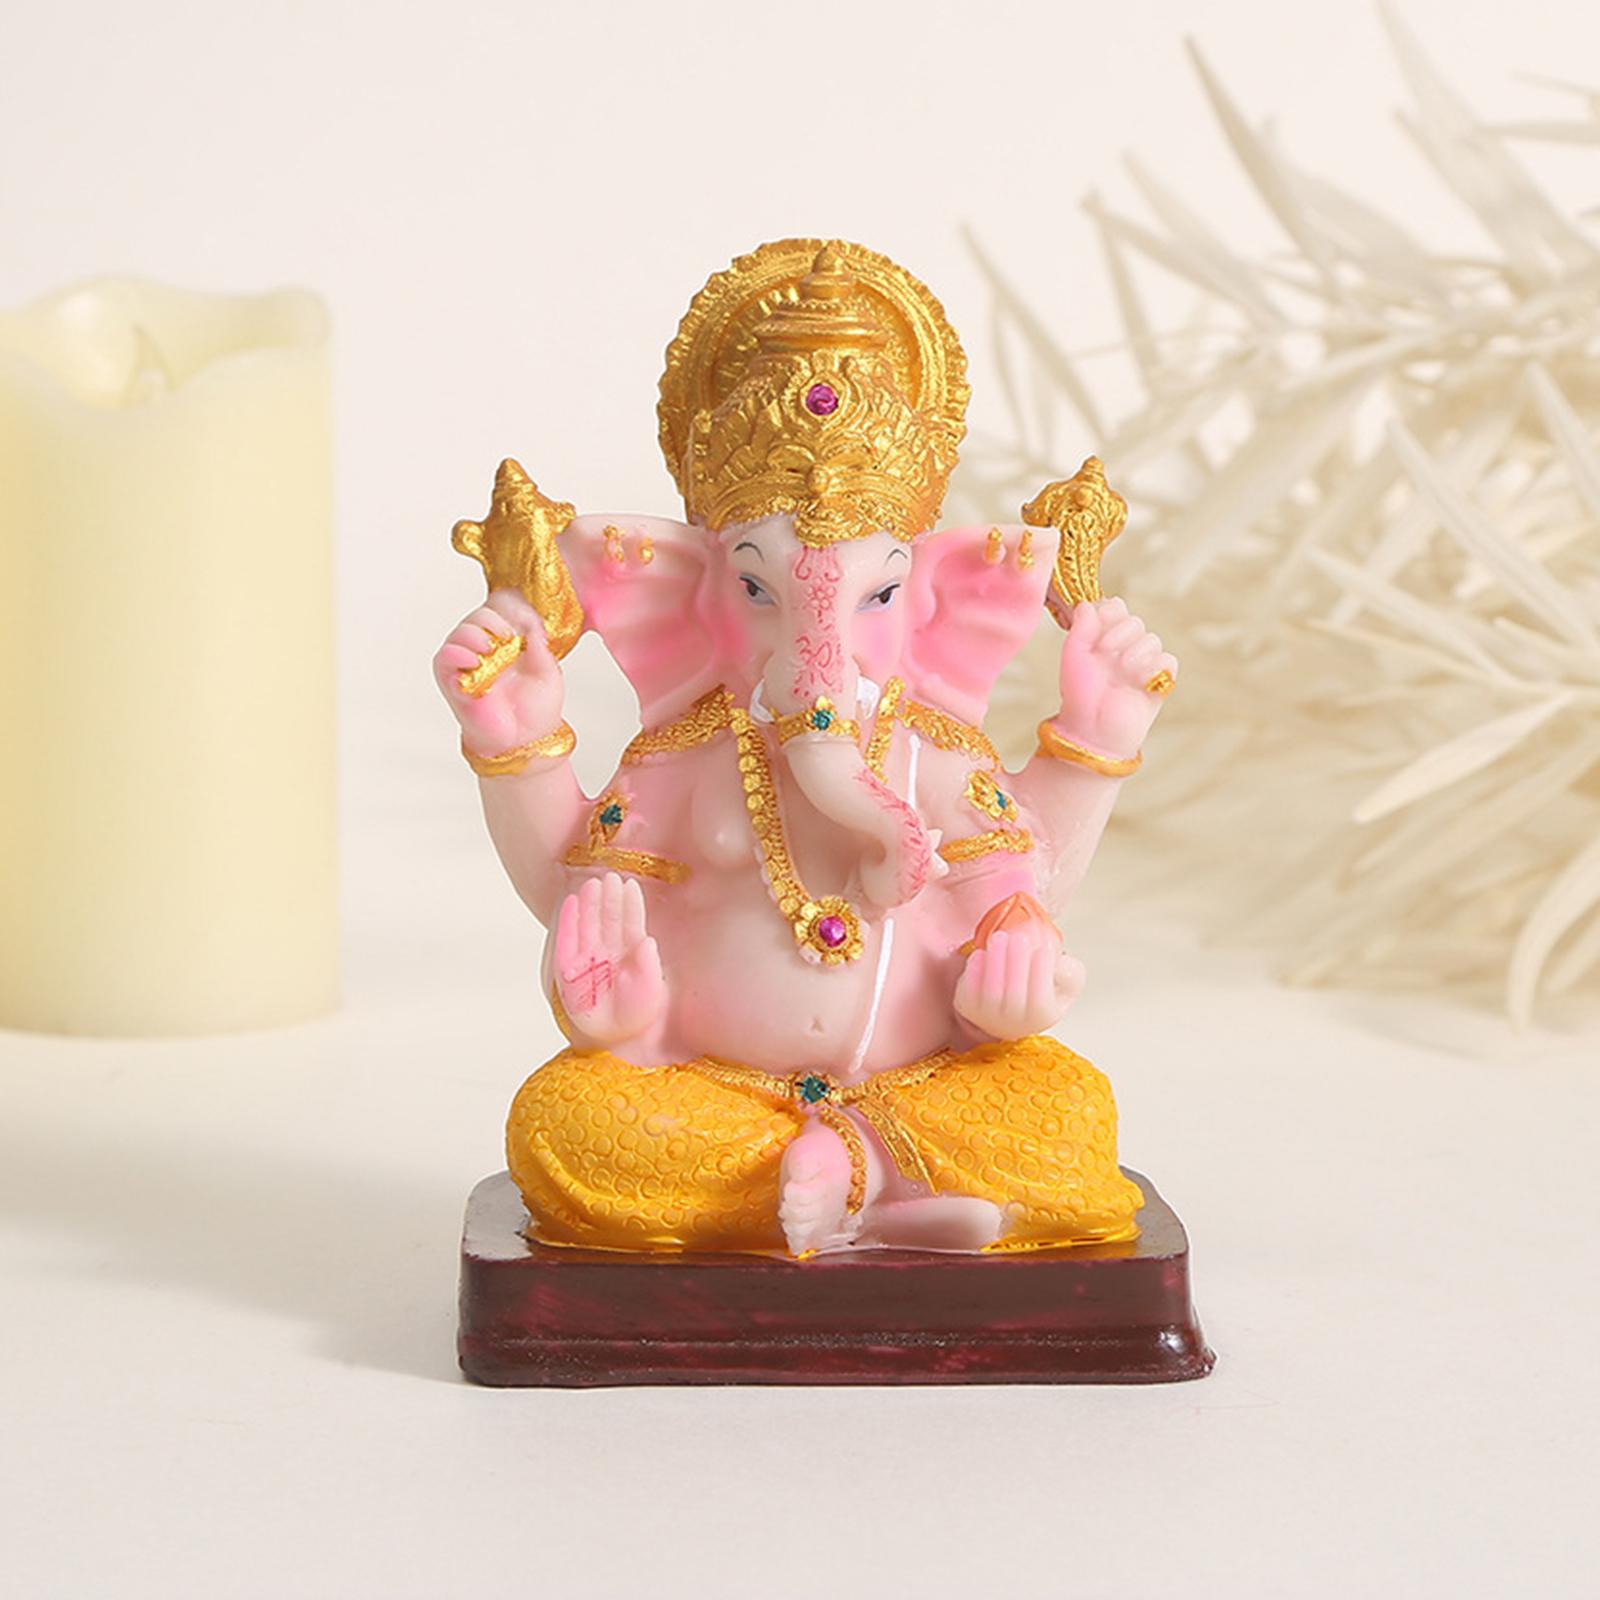 Ganesha Statue Decoration Gift Hindu Elephant God Statue for Home Decoration Style B